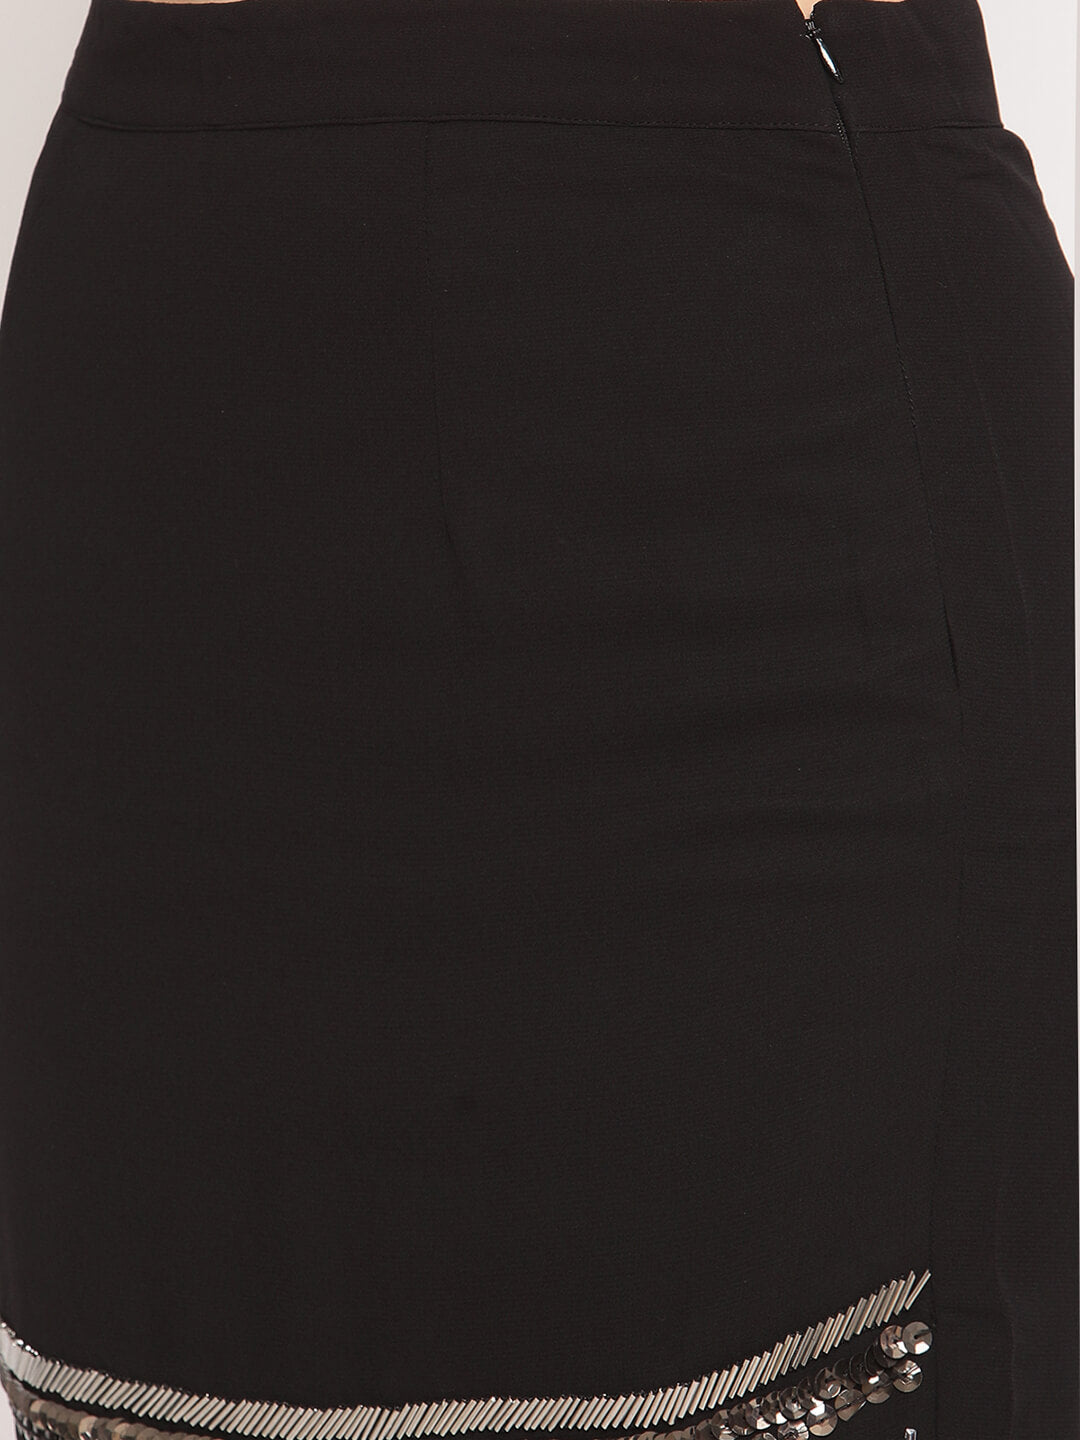 Black Short Skirt With Emblishment At Bottom